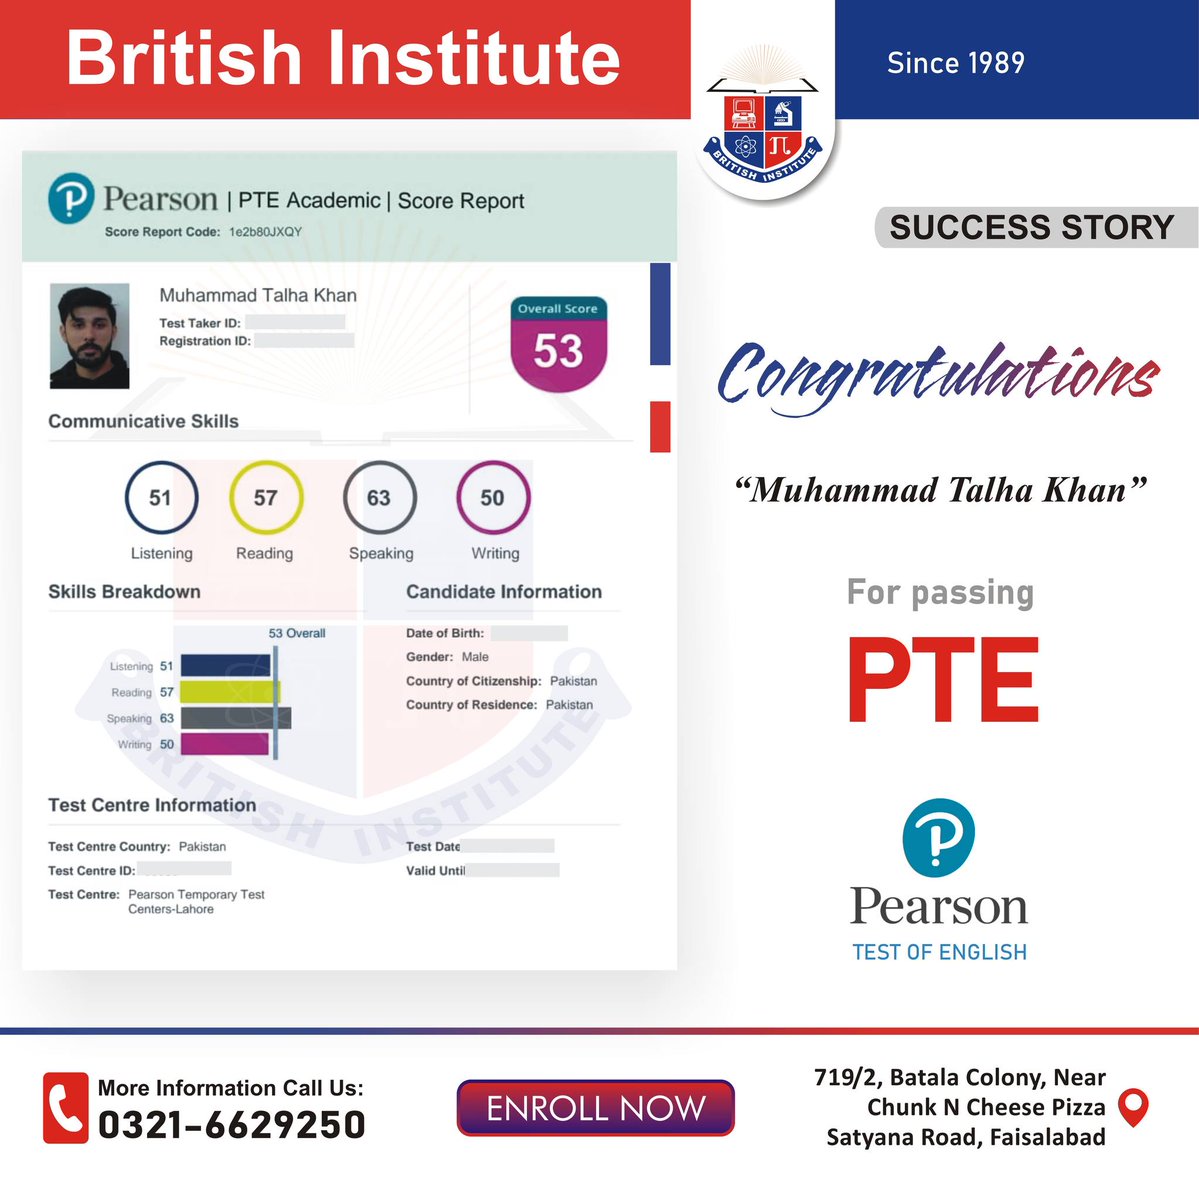 an other #PTE #result 

#pearson #test #of #English #pearsontestofenglish #pteexam #englishtest #EnglishLanguage #bestpte #Australia #studyinAustralia #studyinuk #uk